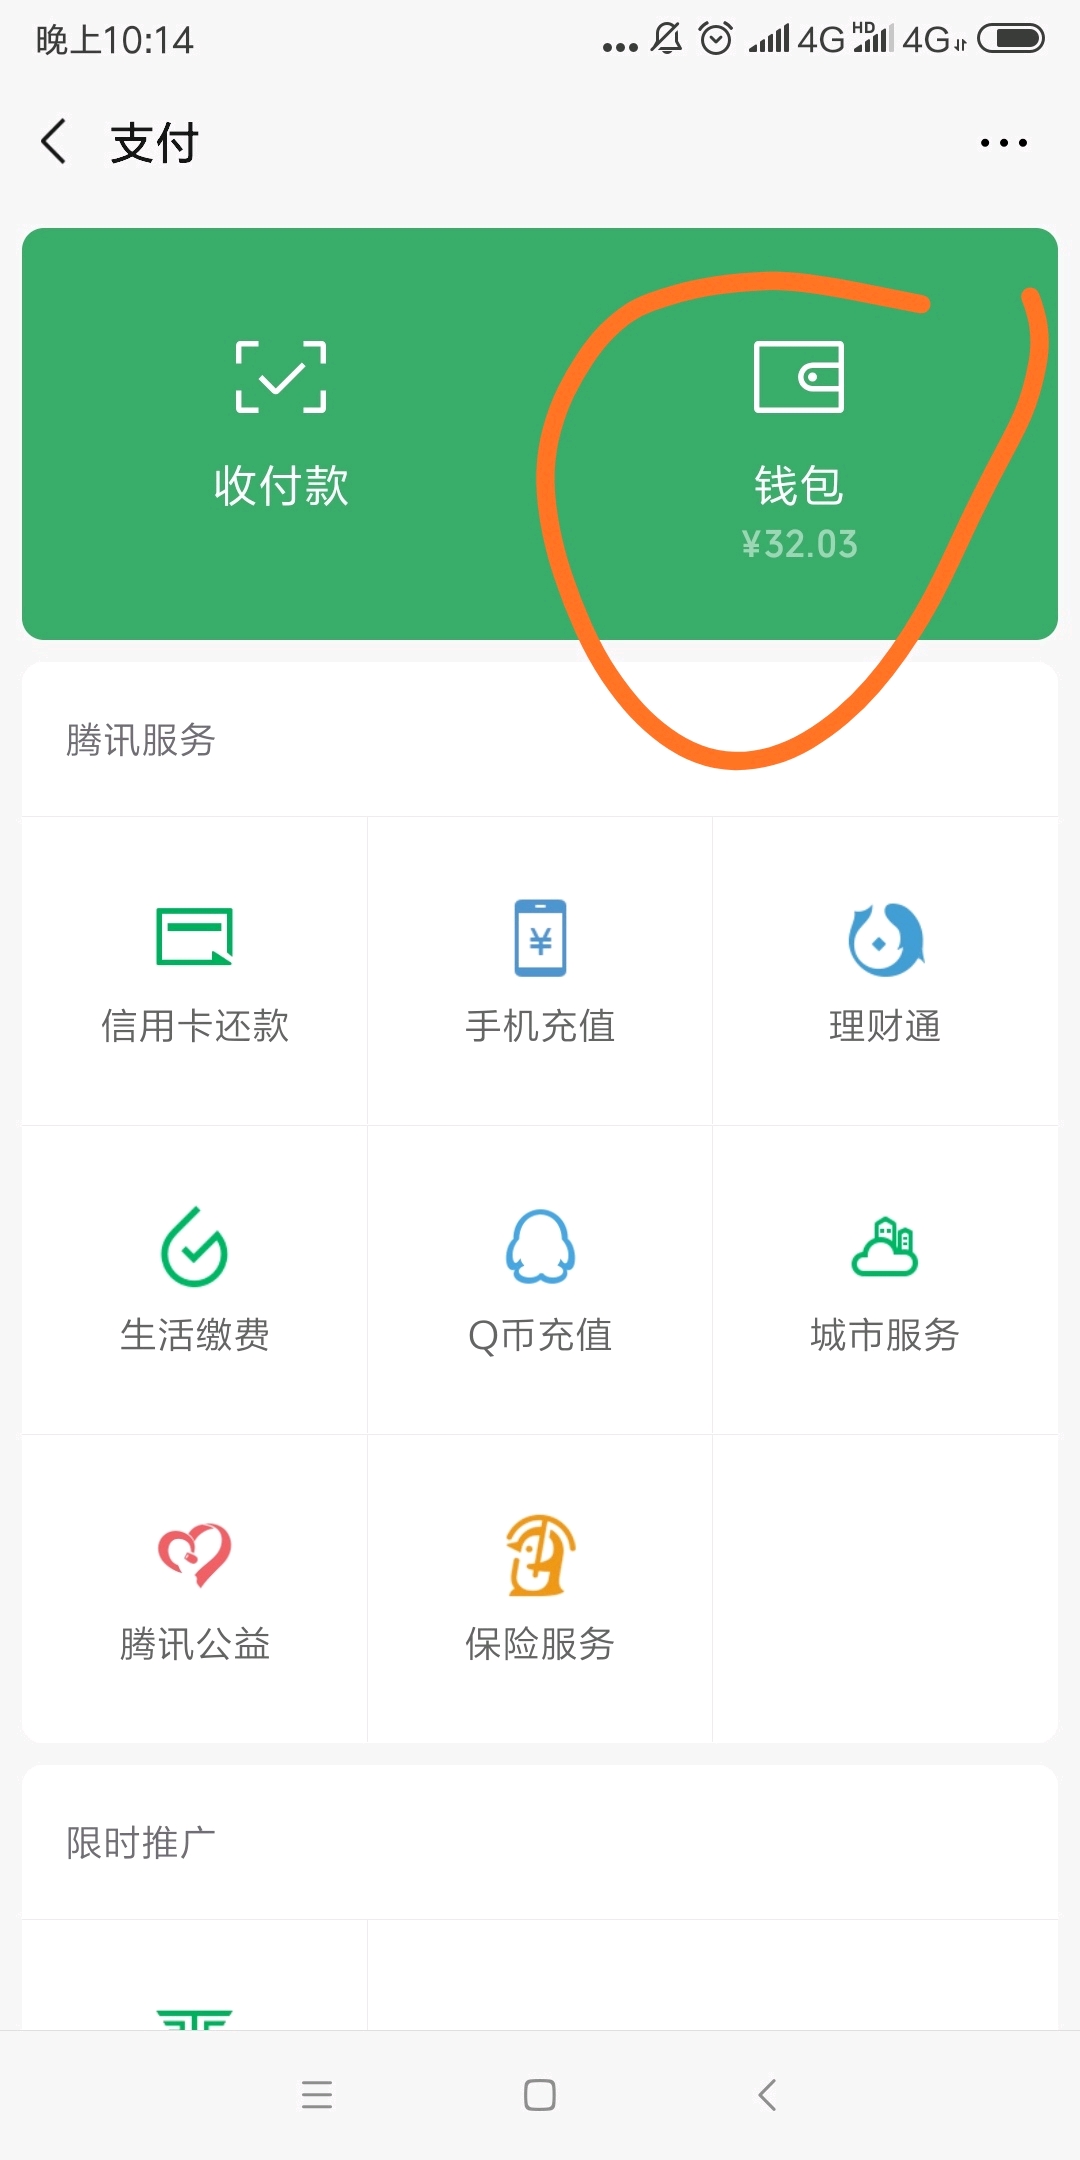 za用微信香港钱包支付是没有1.95货转么-境外用卡-FLYERT